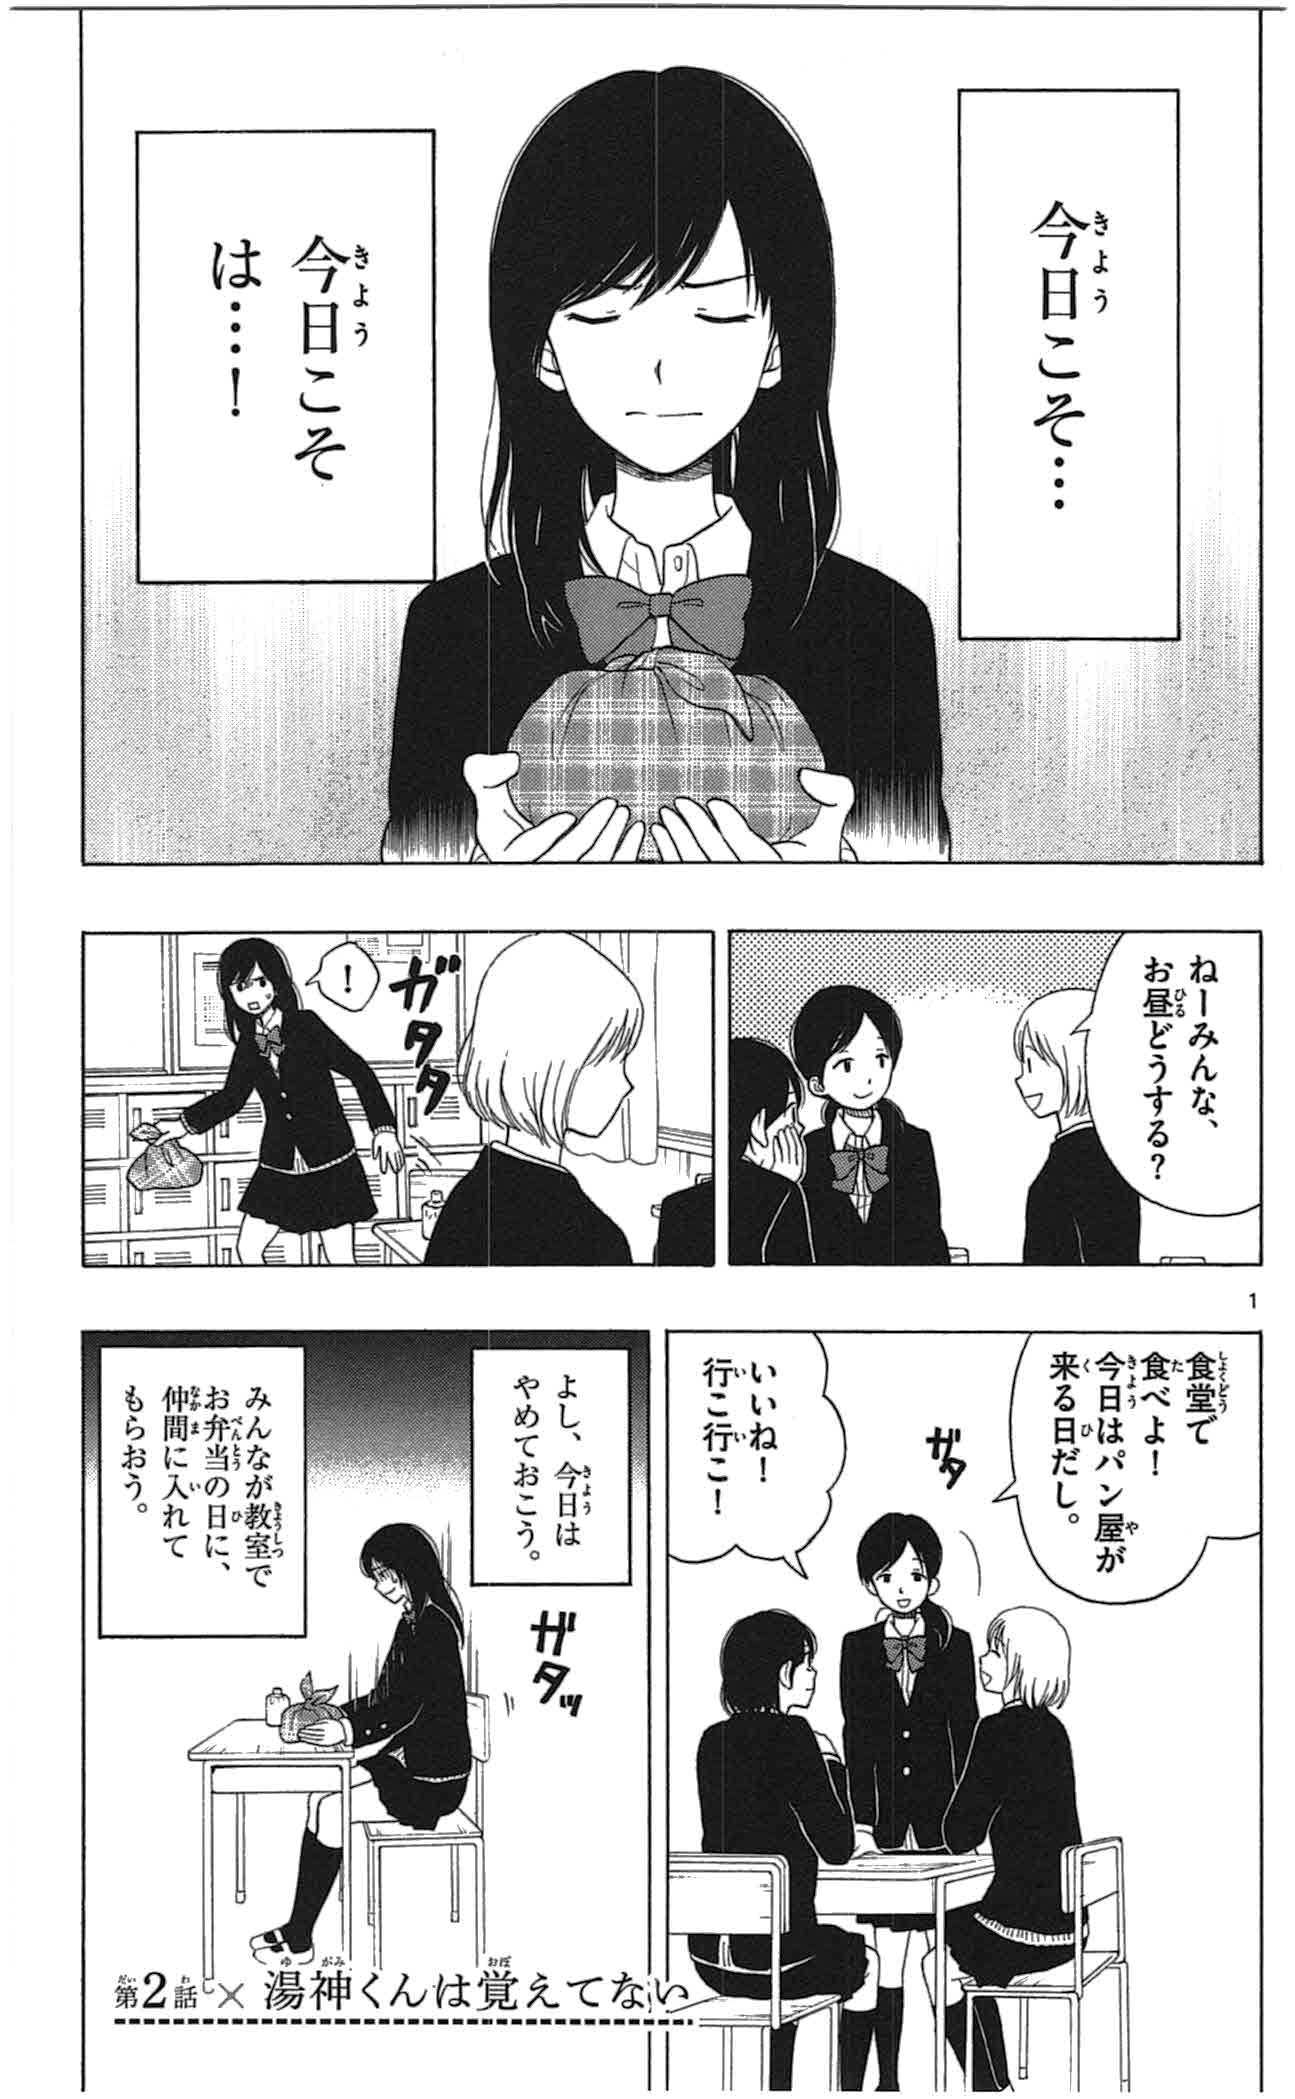 Yugami-kun ni wa Tomodachi ga Inai - Chapter 002 - Page 1